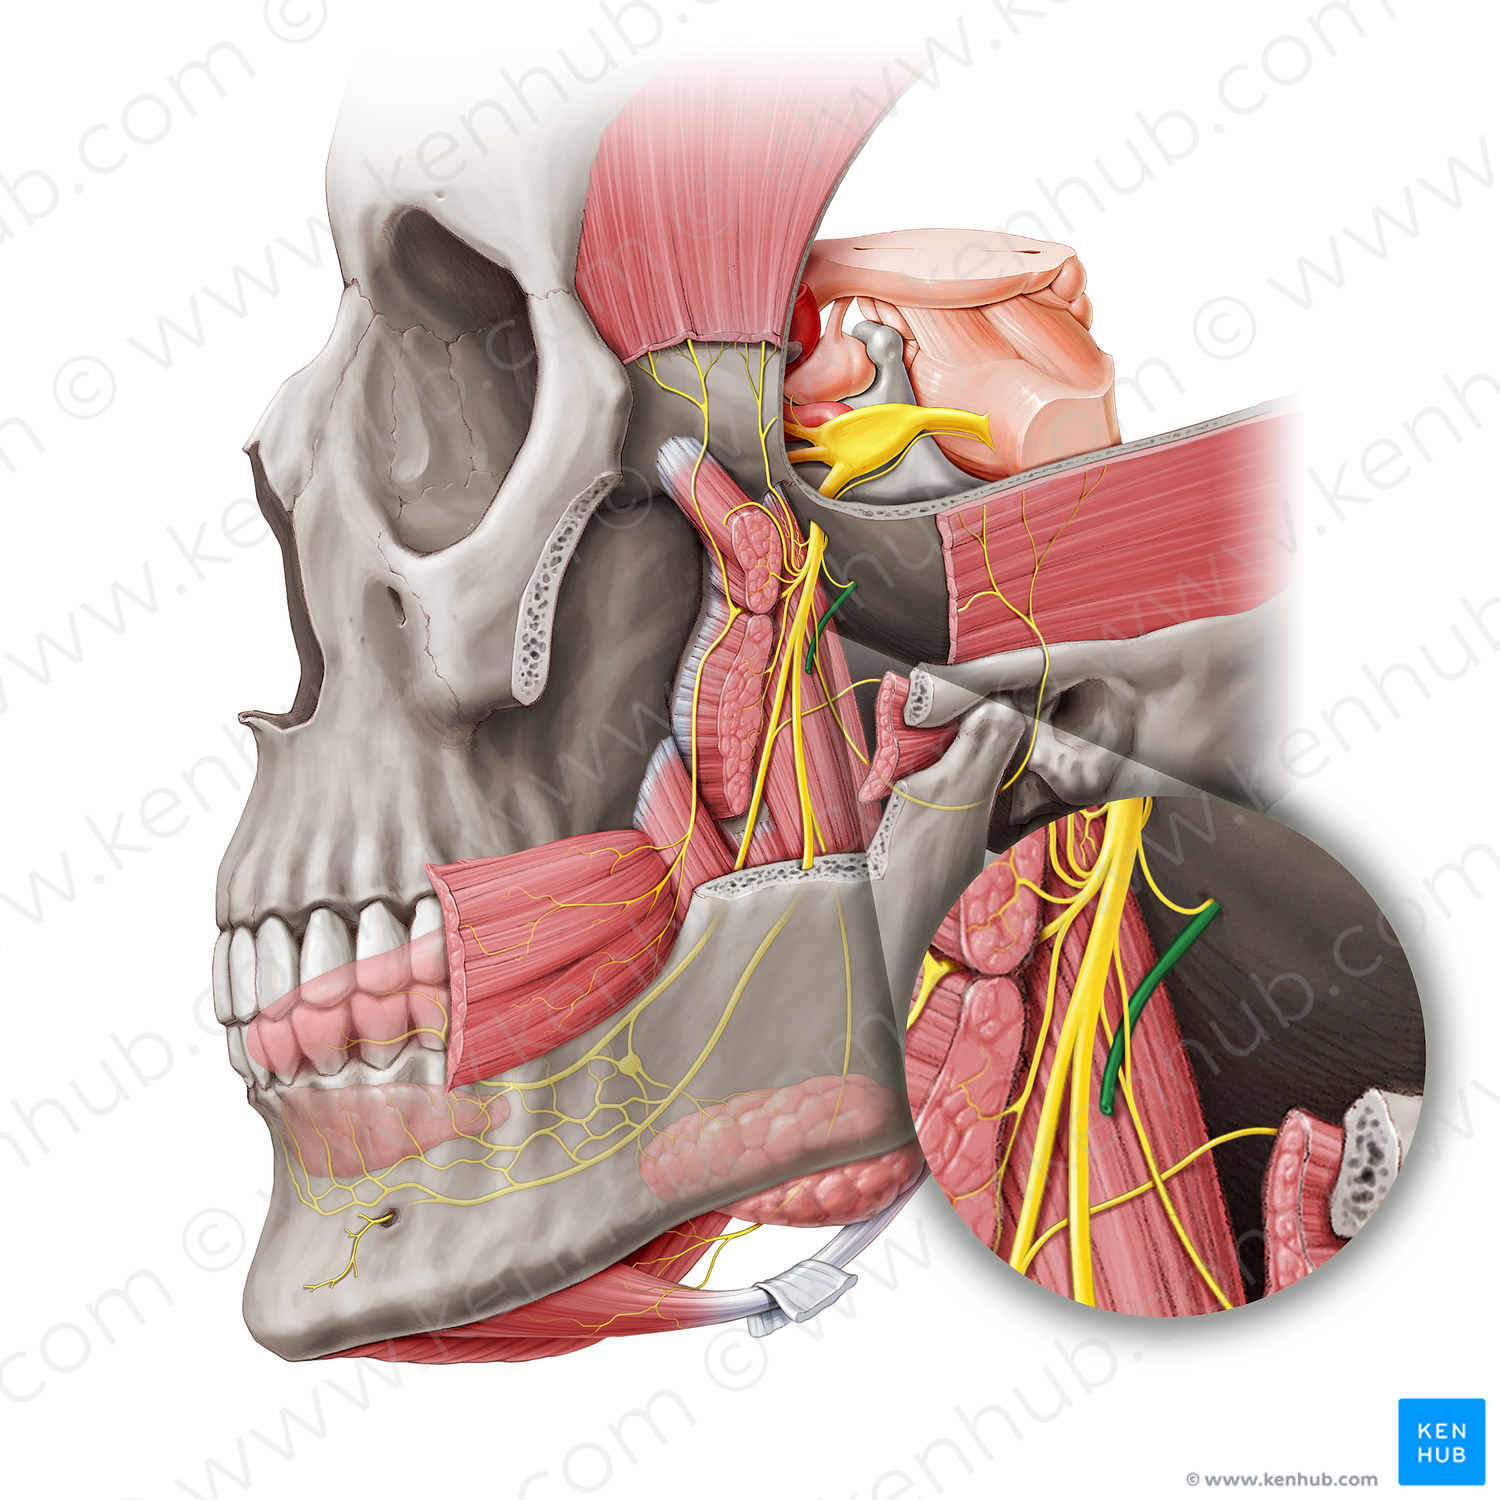 Middle meningeal artery (#1507)